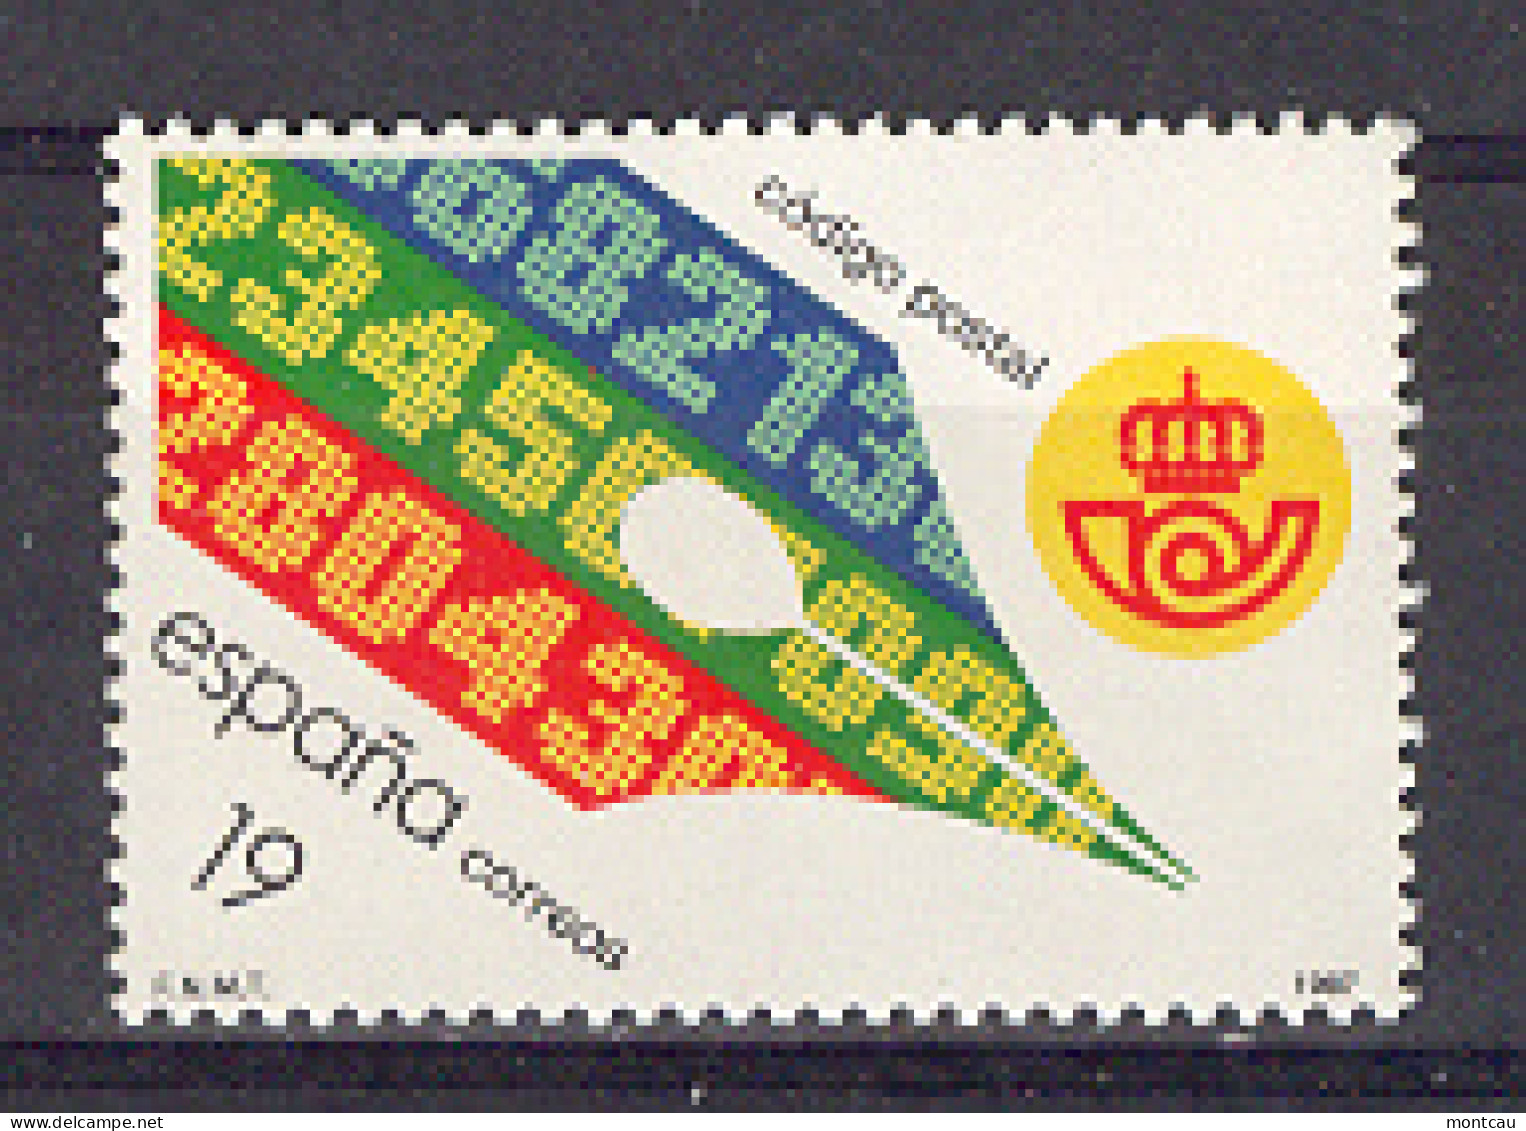 Spain 1987. Codigo Postal Ed 2906 (**) - Nuovi